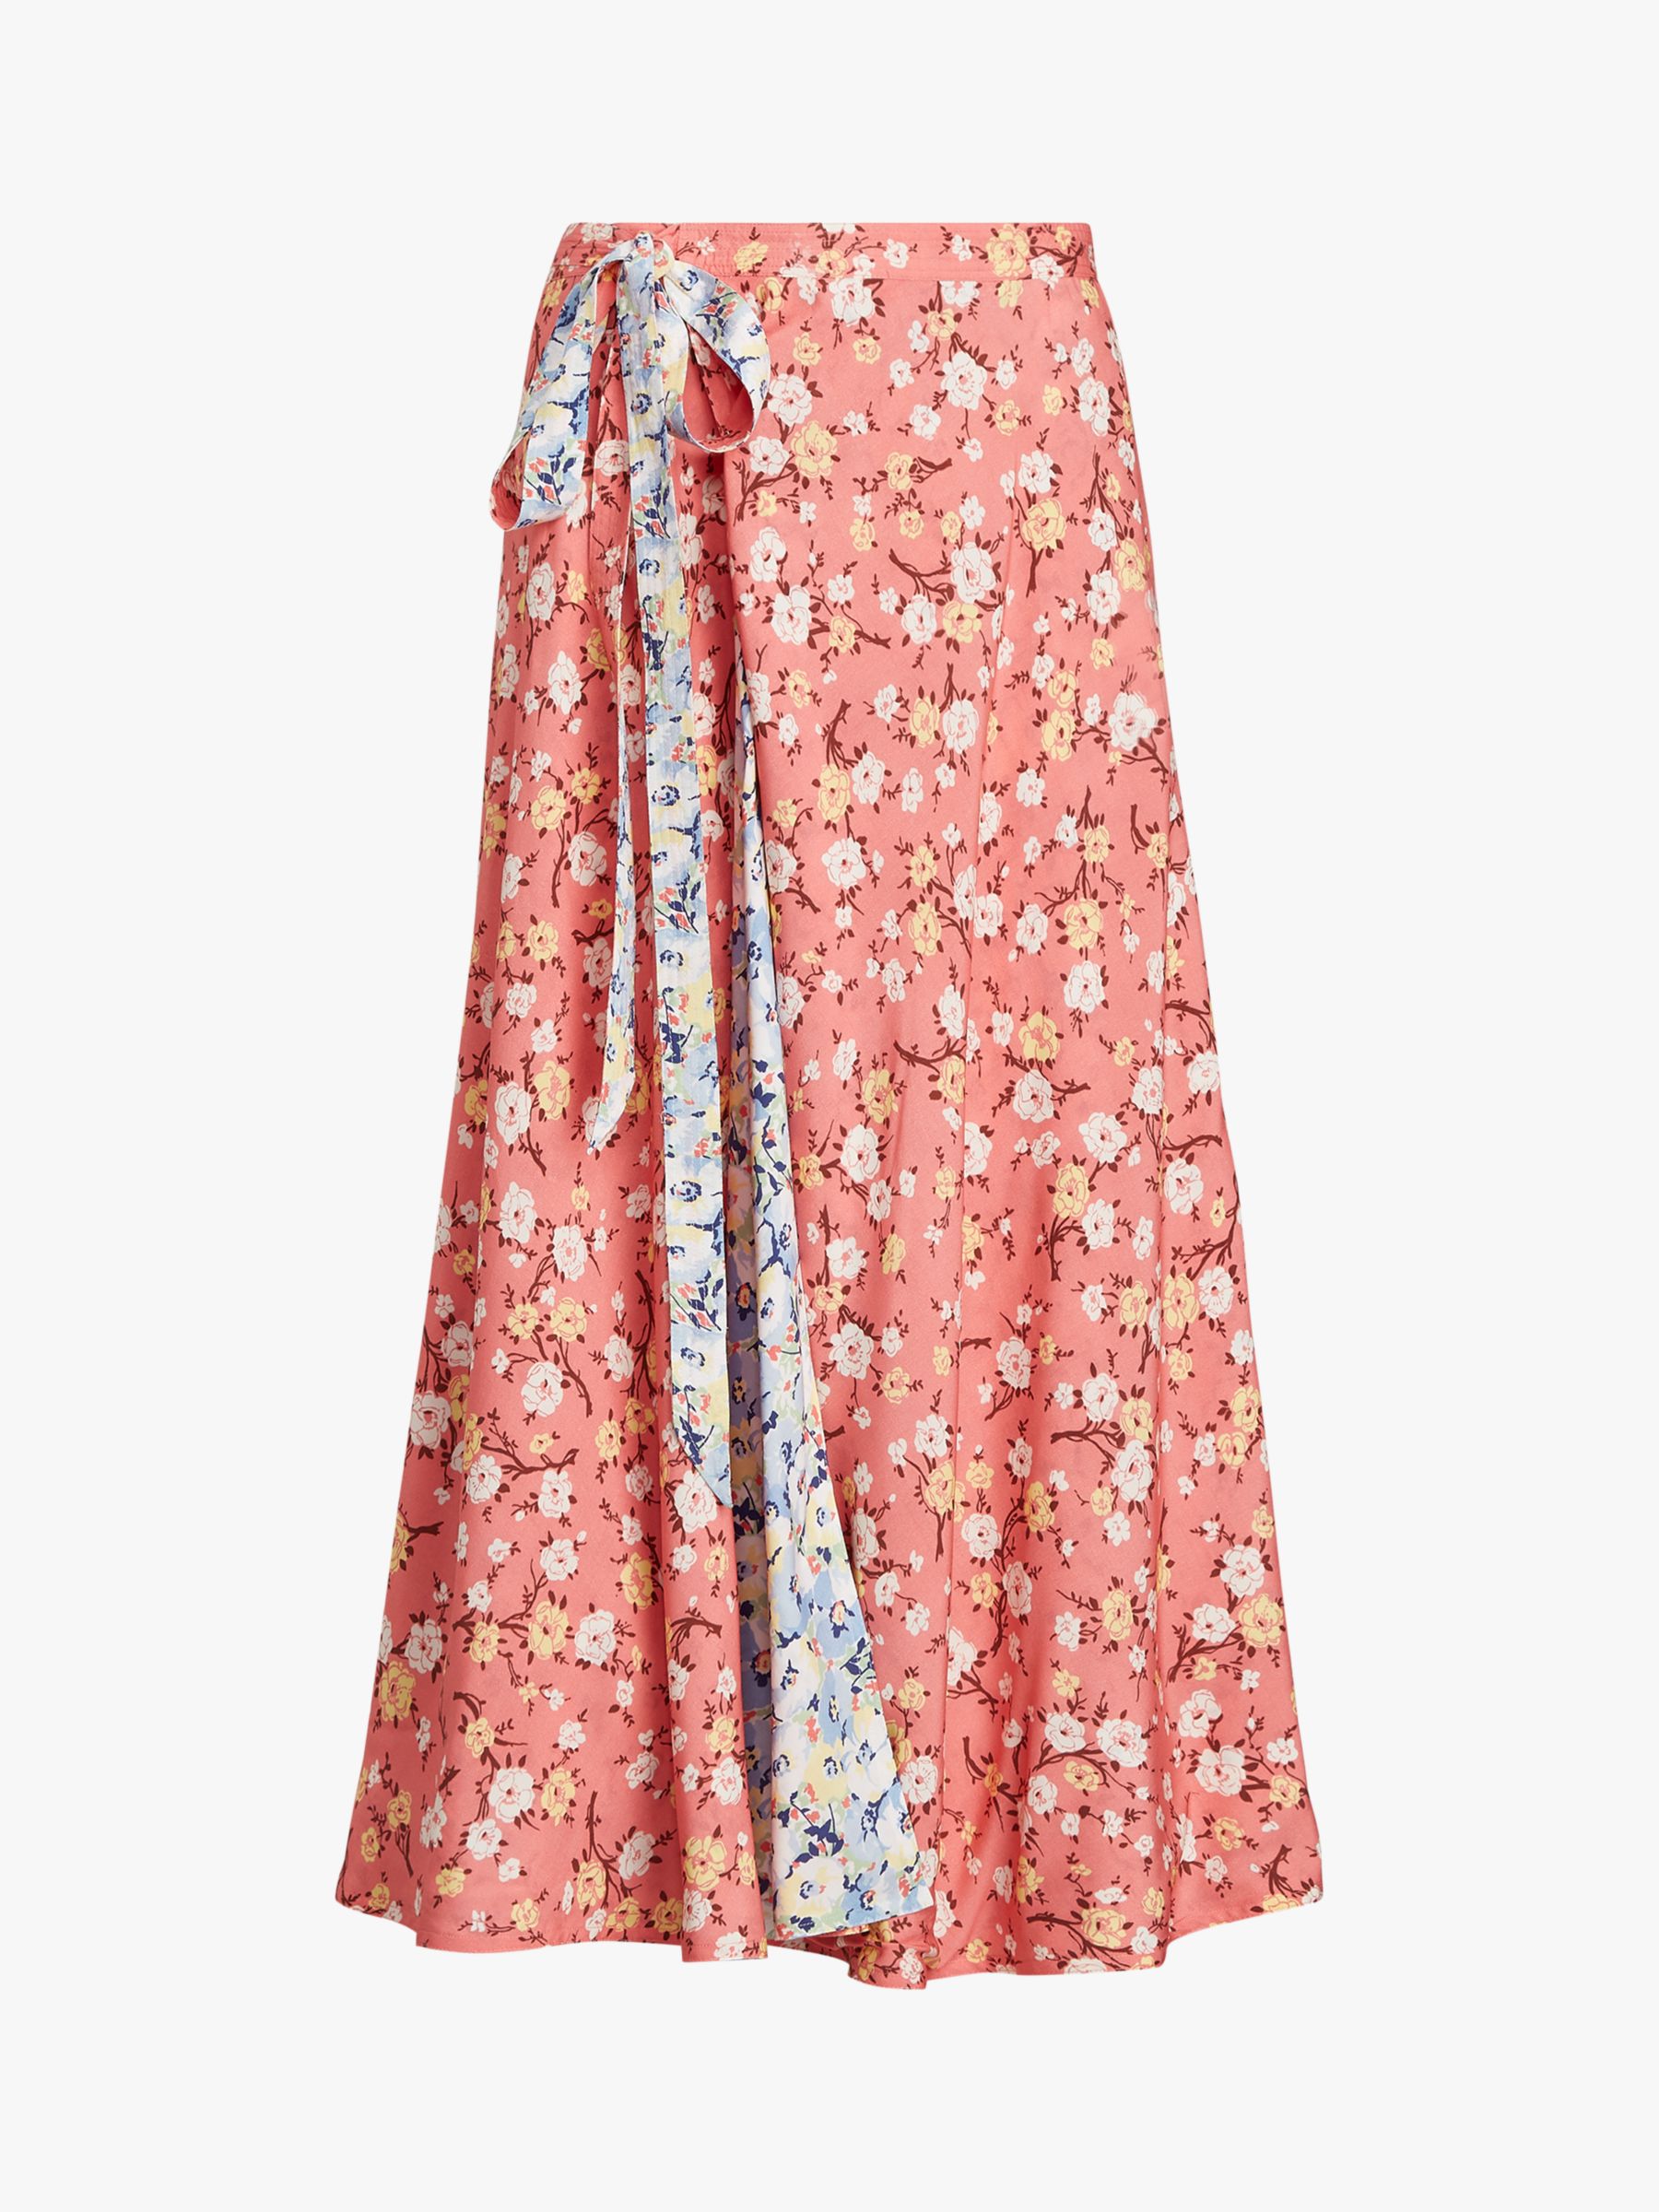 Polo Ralph Lauren Reversible Floral Print Maxi Skirt, Blush/Multi